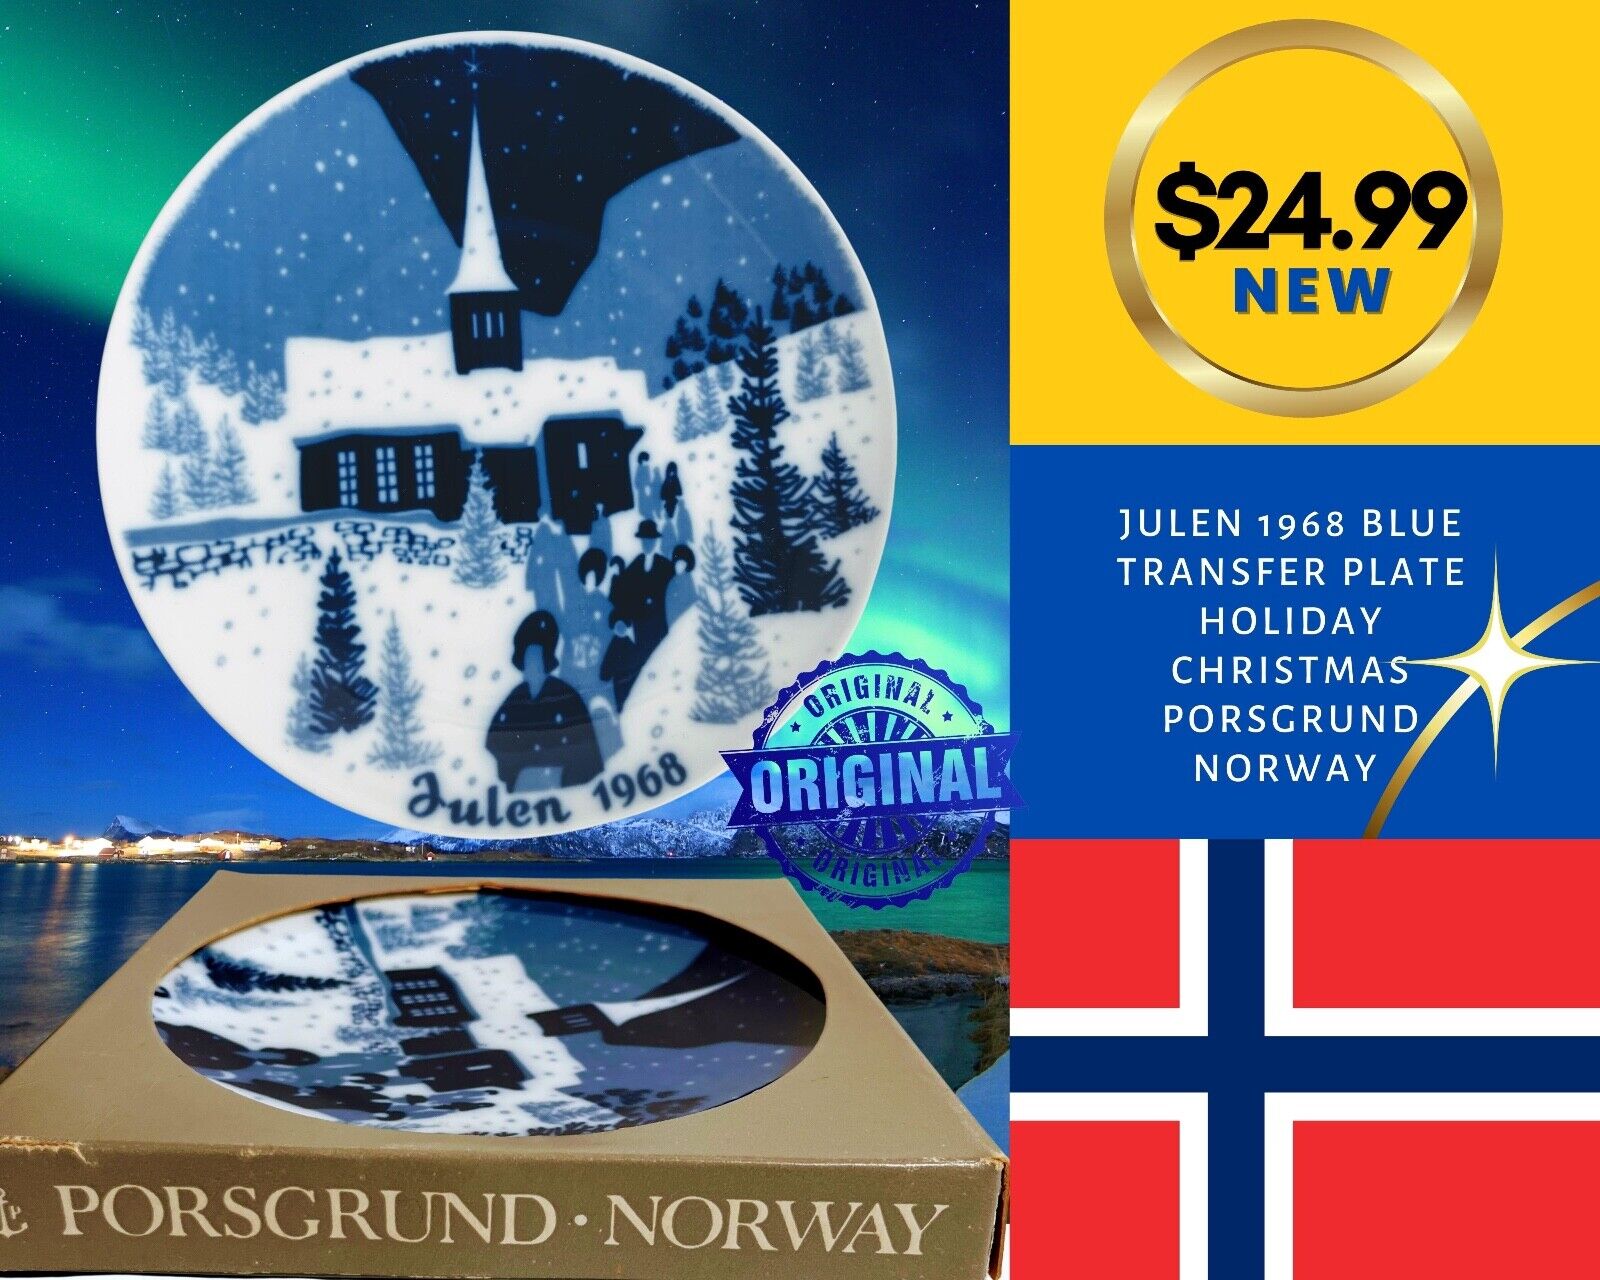 Julen 1968 Blue transfer plate Holiday Christmas Porsgrund Norway.